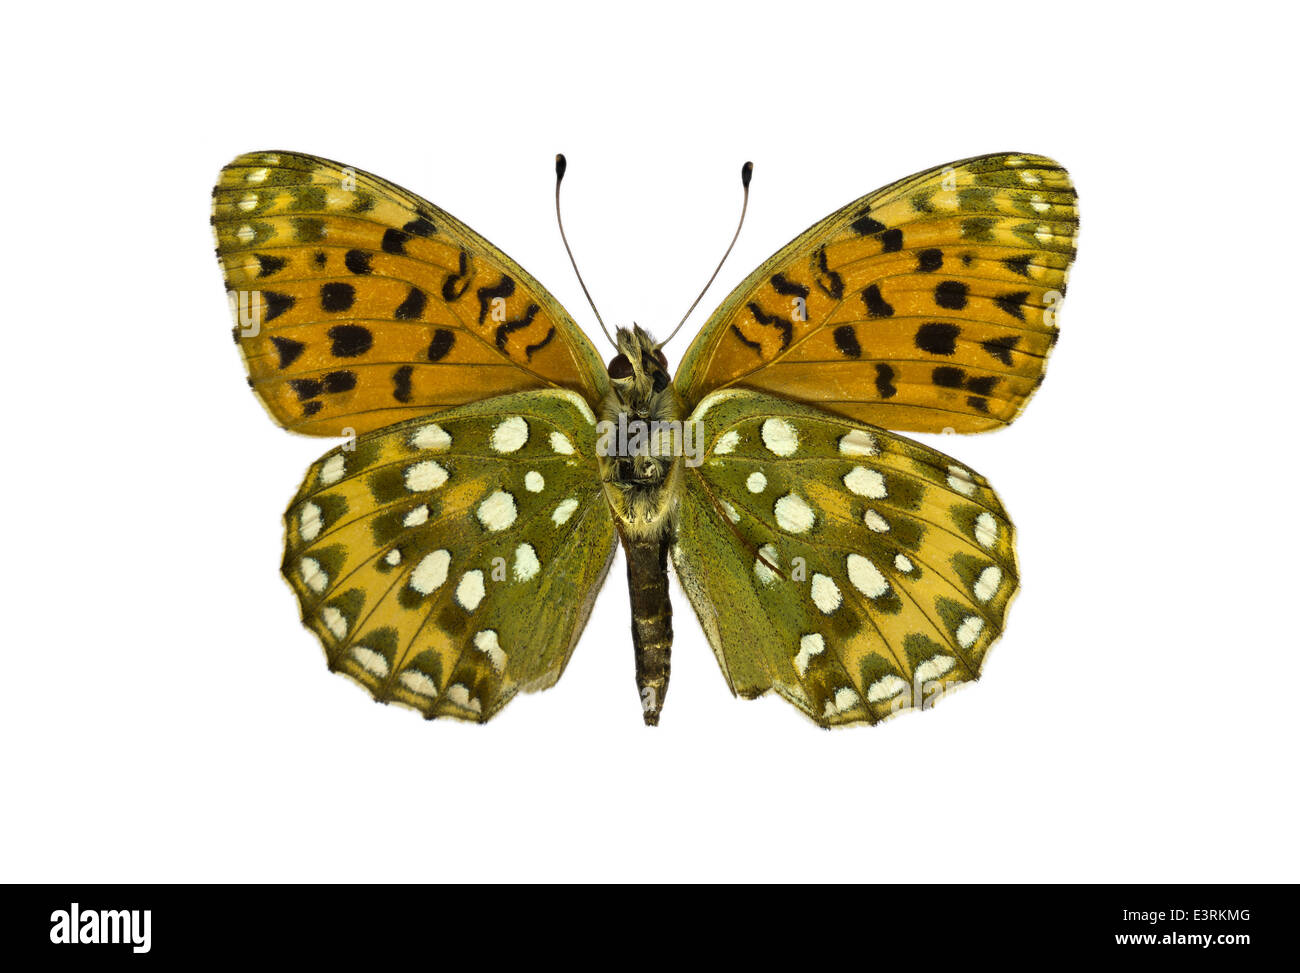 Lepidoptera; Nymphalidae Argynnis aglaja Mesoacidalia;;; Papilio aglaja aglaja; Linnaeus 1758; Speyeria Grren oscuro; Foto de stock